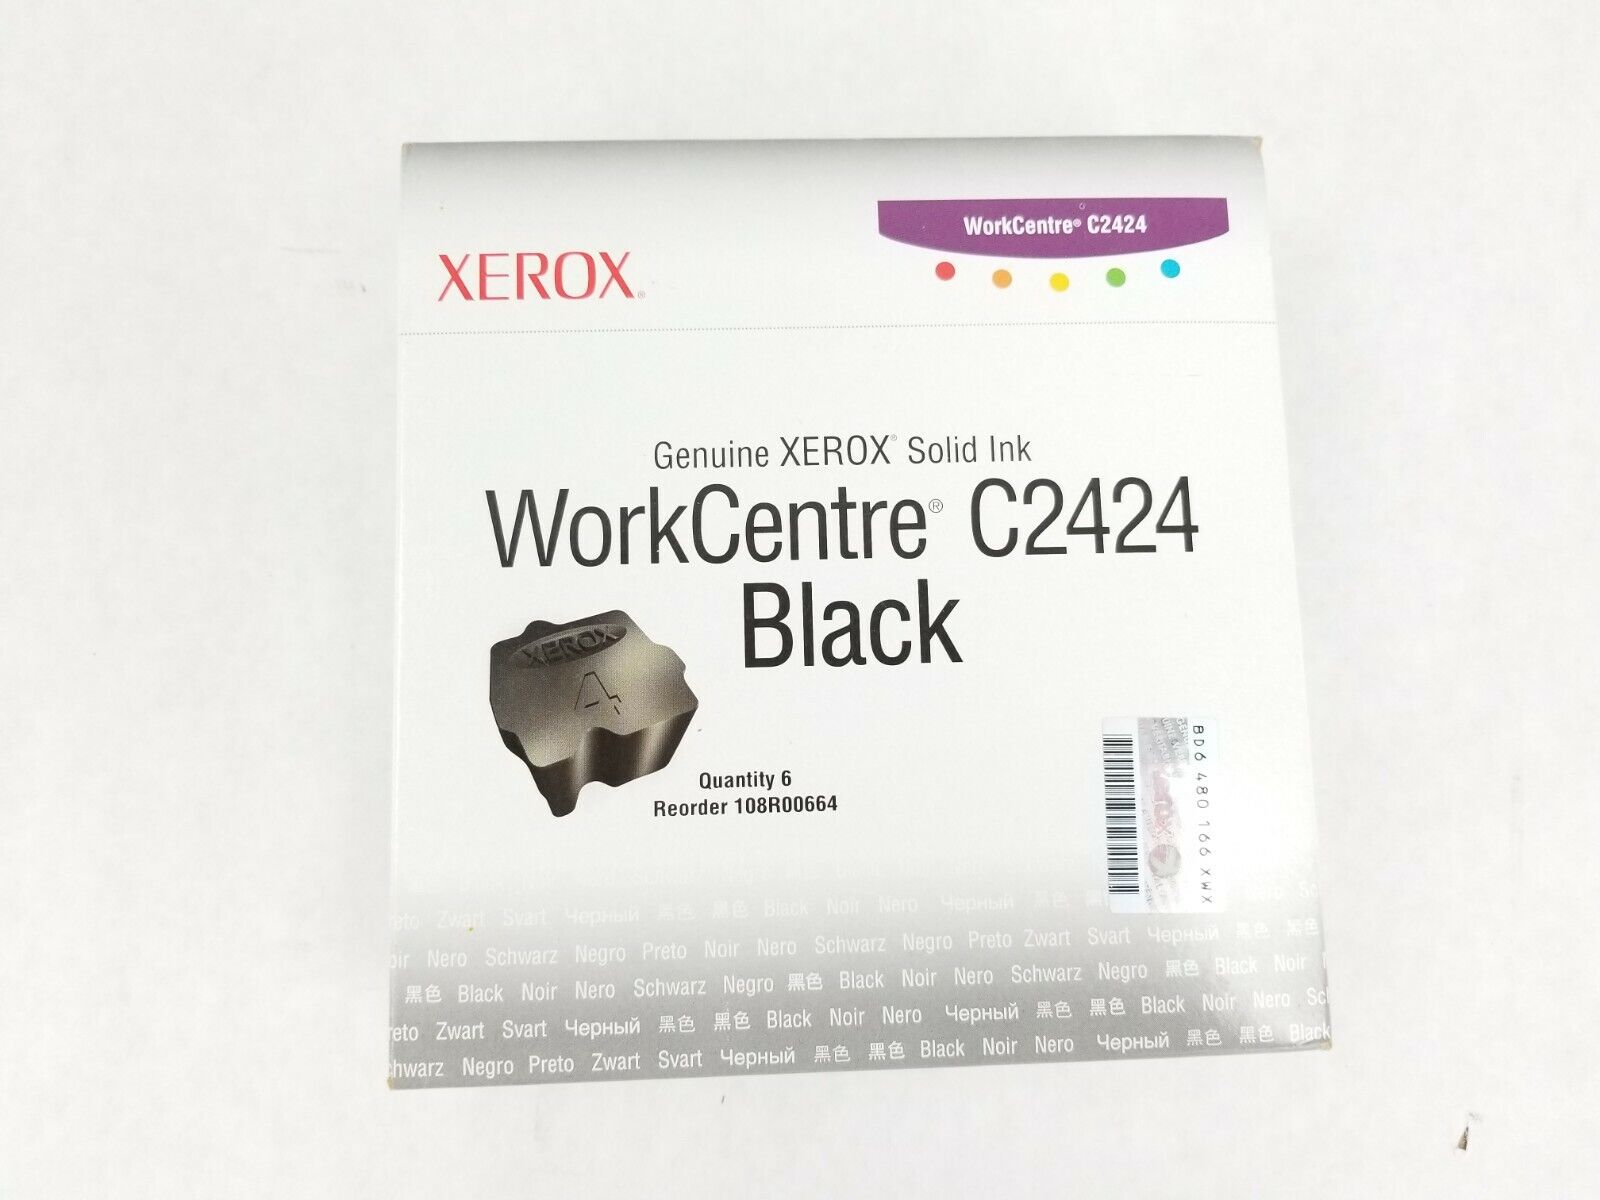 Xerox Black Solid Ink Cartridge WorkCentre C2424 - 6 Pack